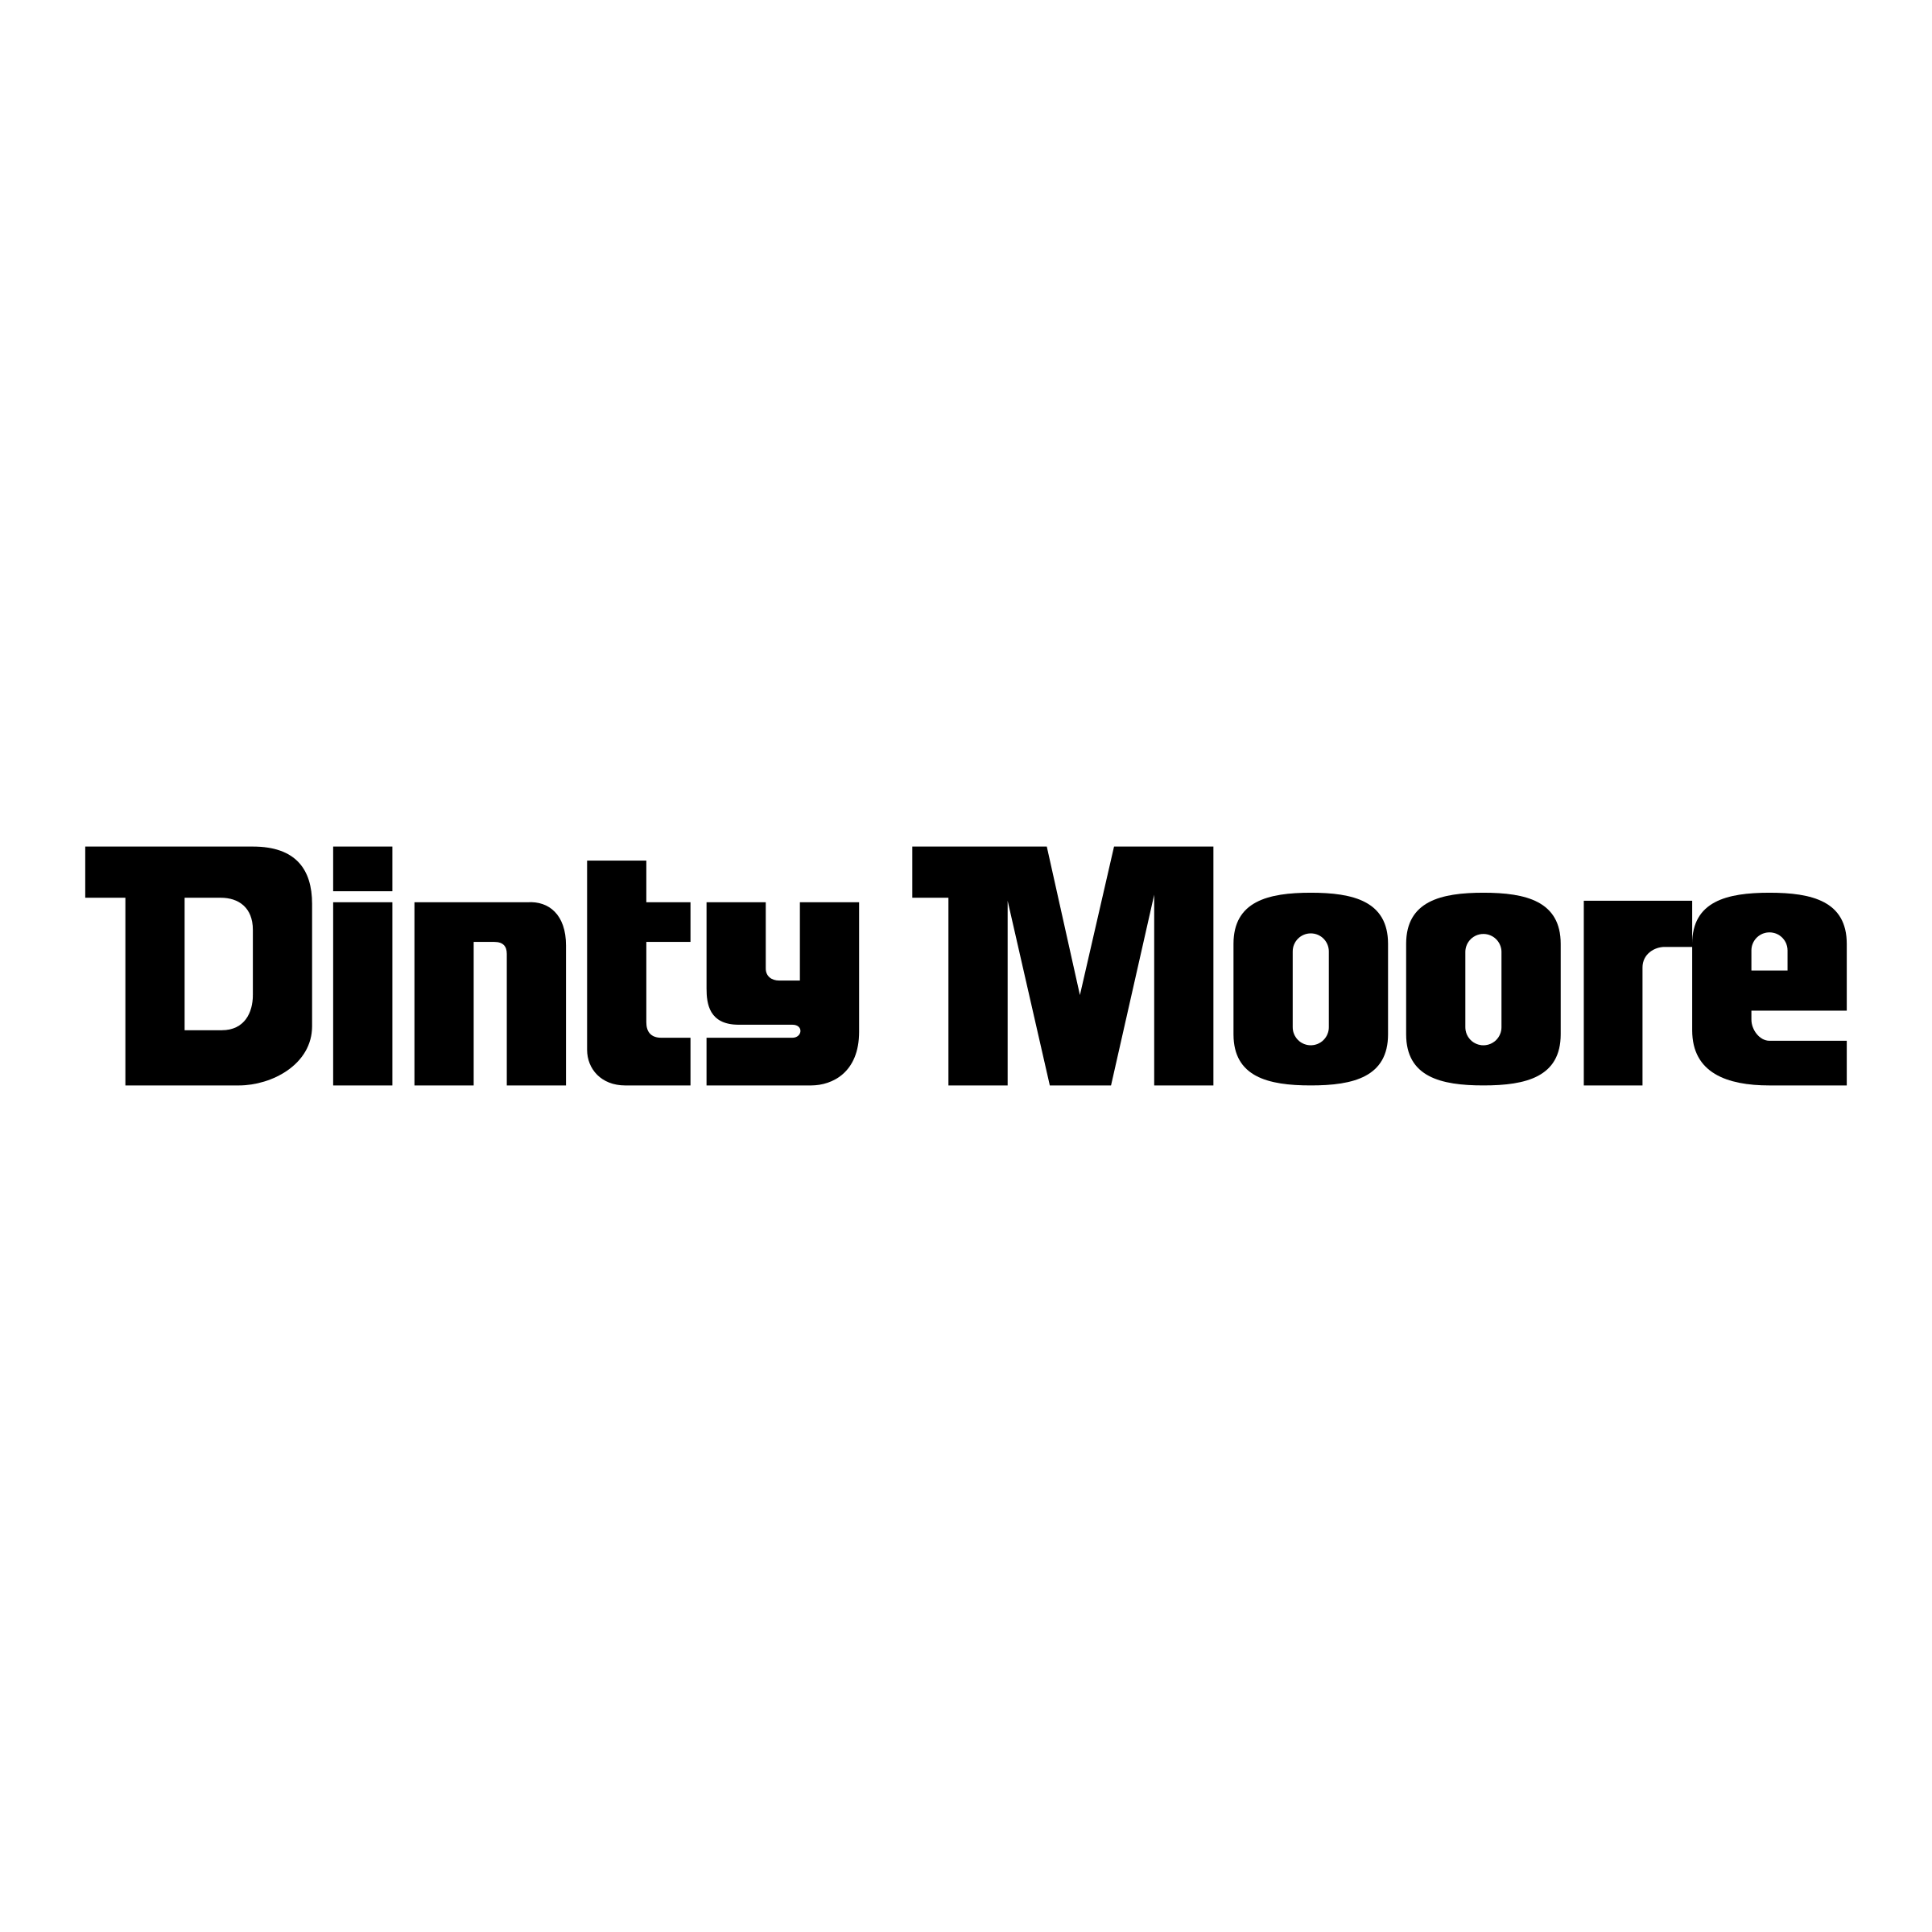 Moore Logo - Dinty Moore Logo PNG Transparent & SVG Vector - Freebie Supply